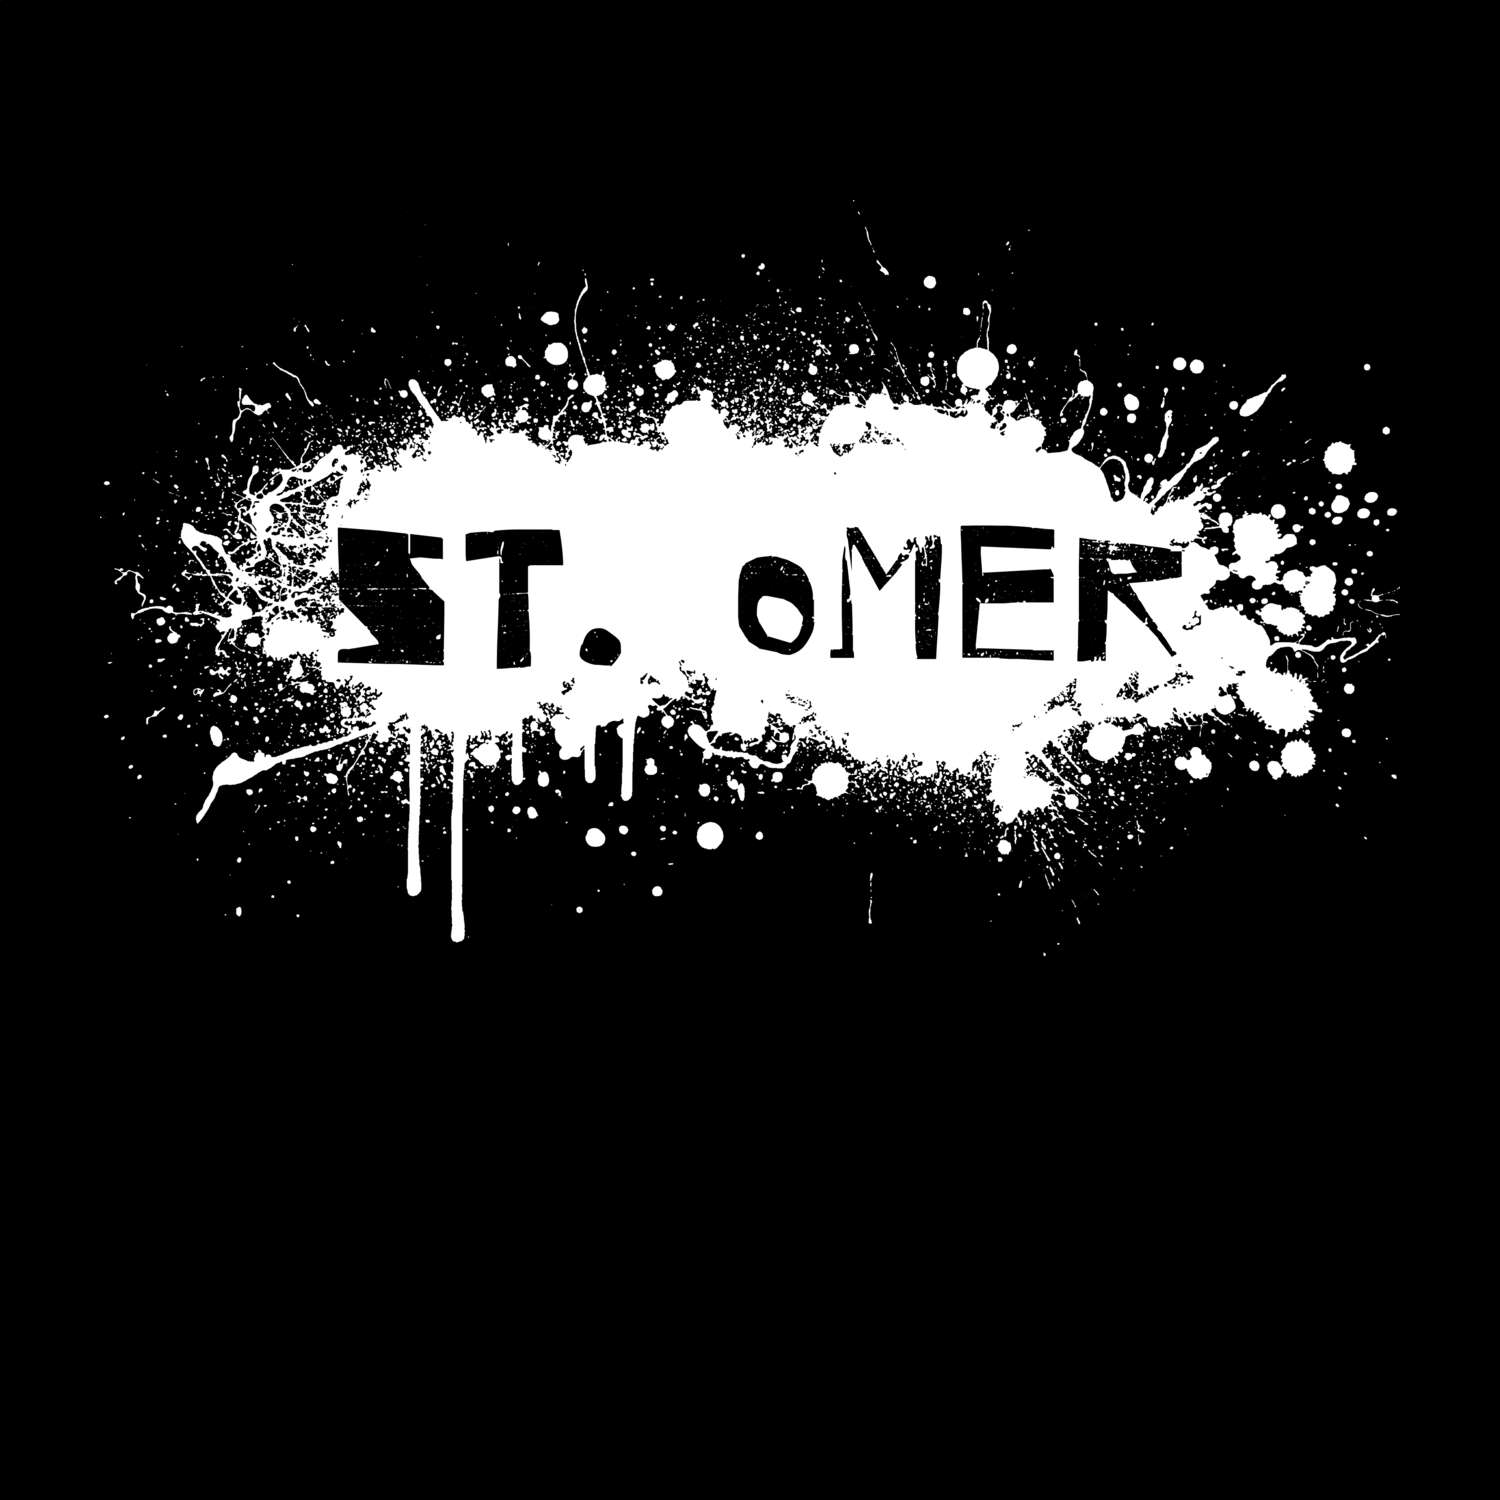 St. Omer T-Shirt »Paint Splash Punk«